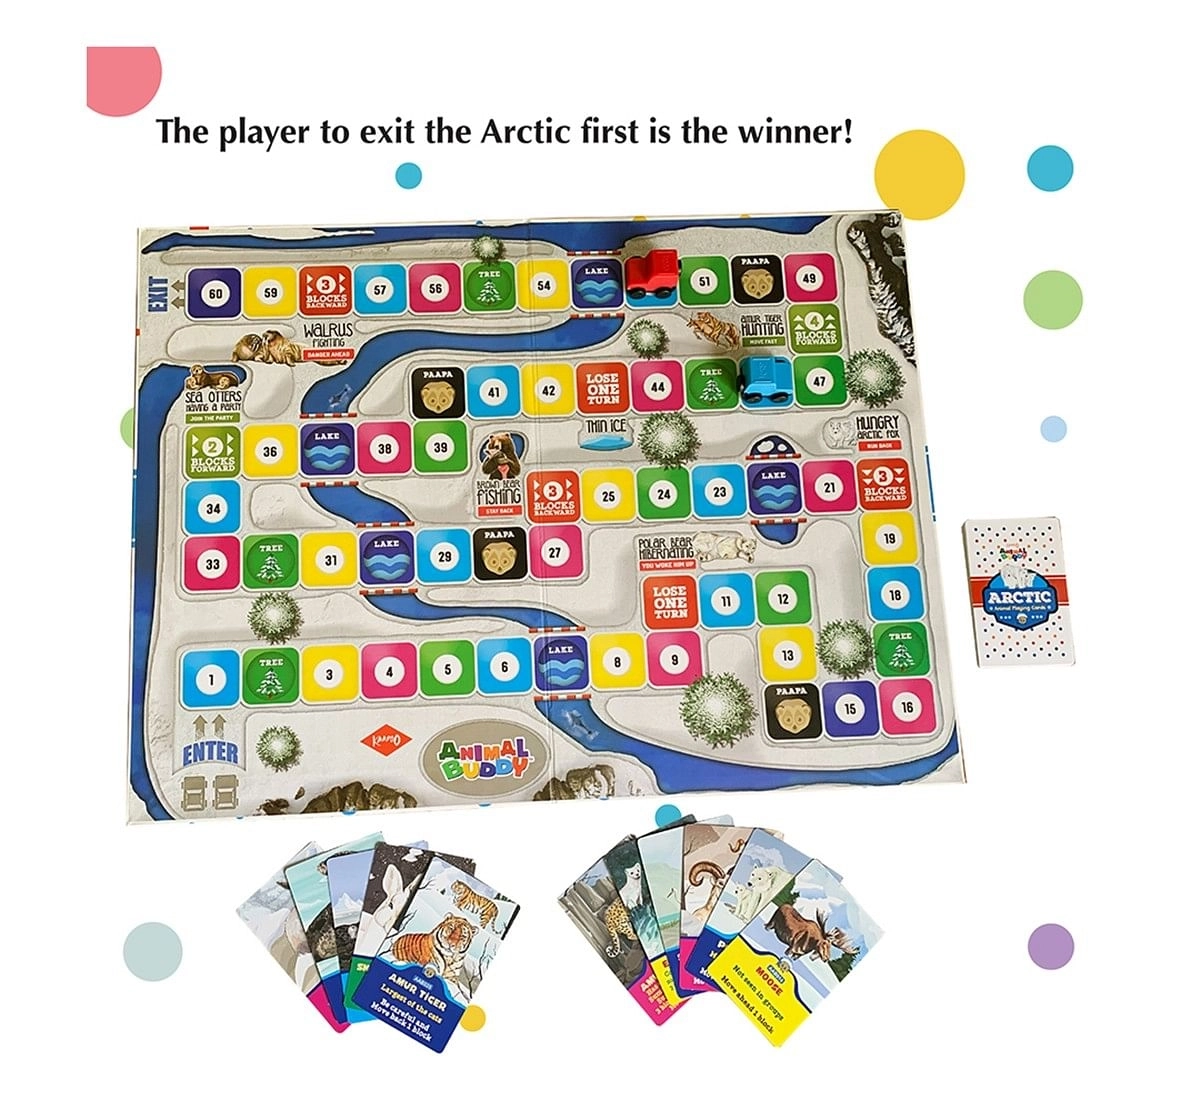 Kaadoo Animal Buddy-Arctic World Edition Board Game for Kids age 10Y+ 